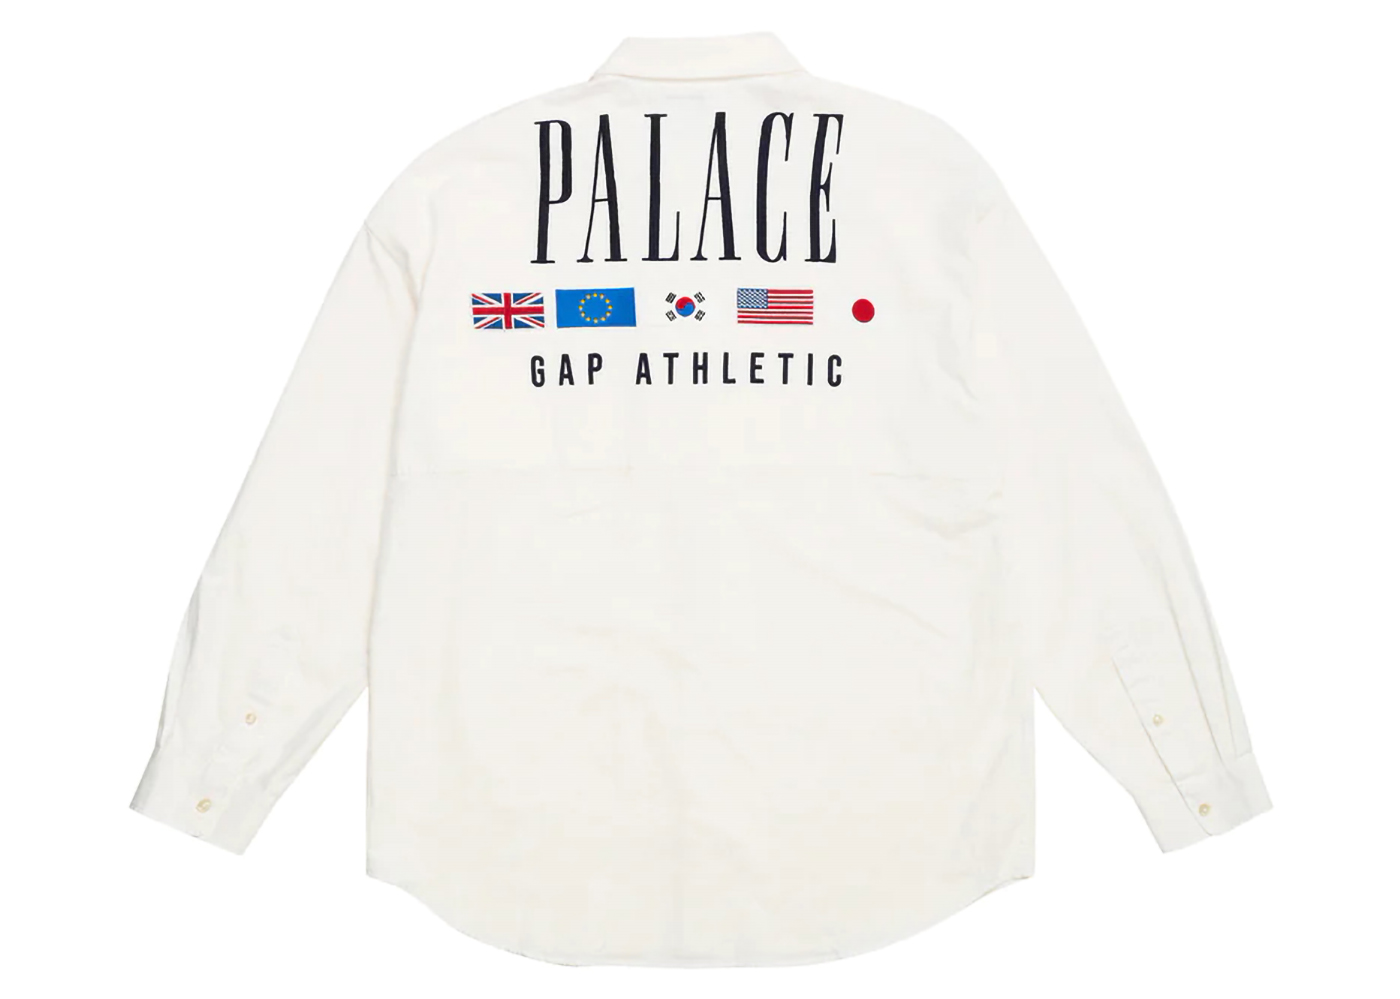 Palace x Gap Drop Shoulder Oxford Shirt White